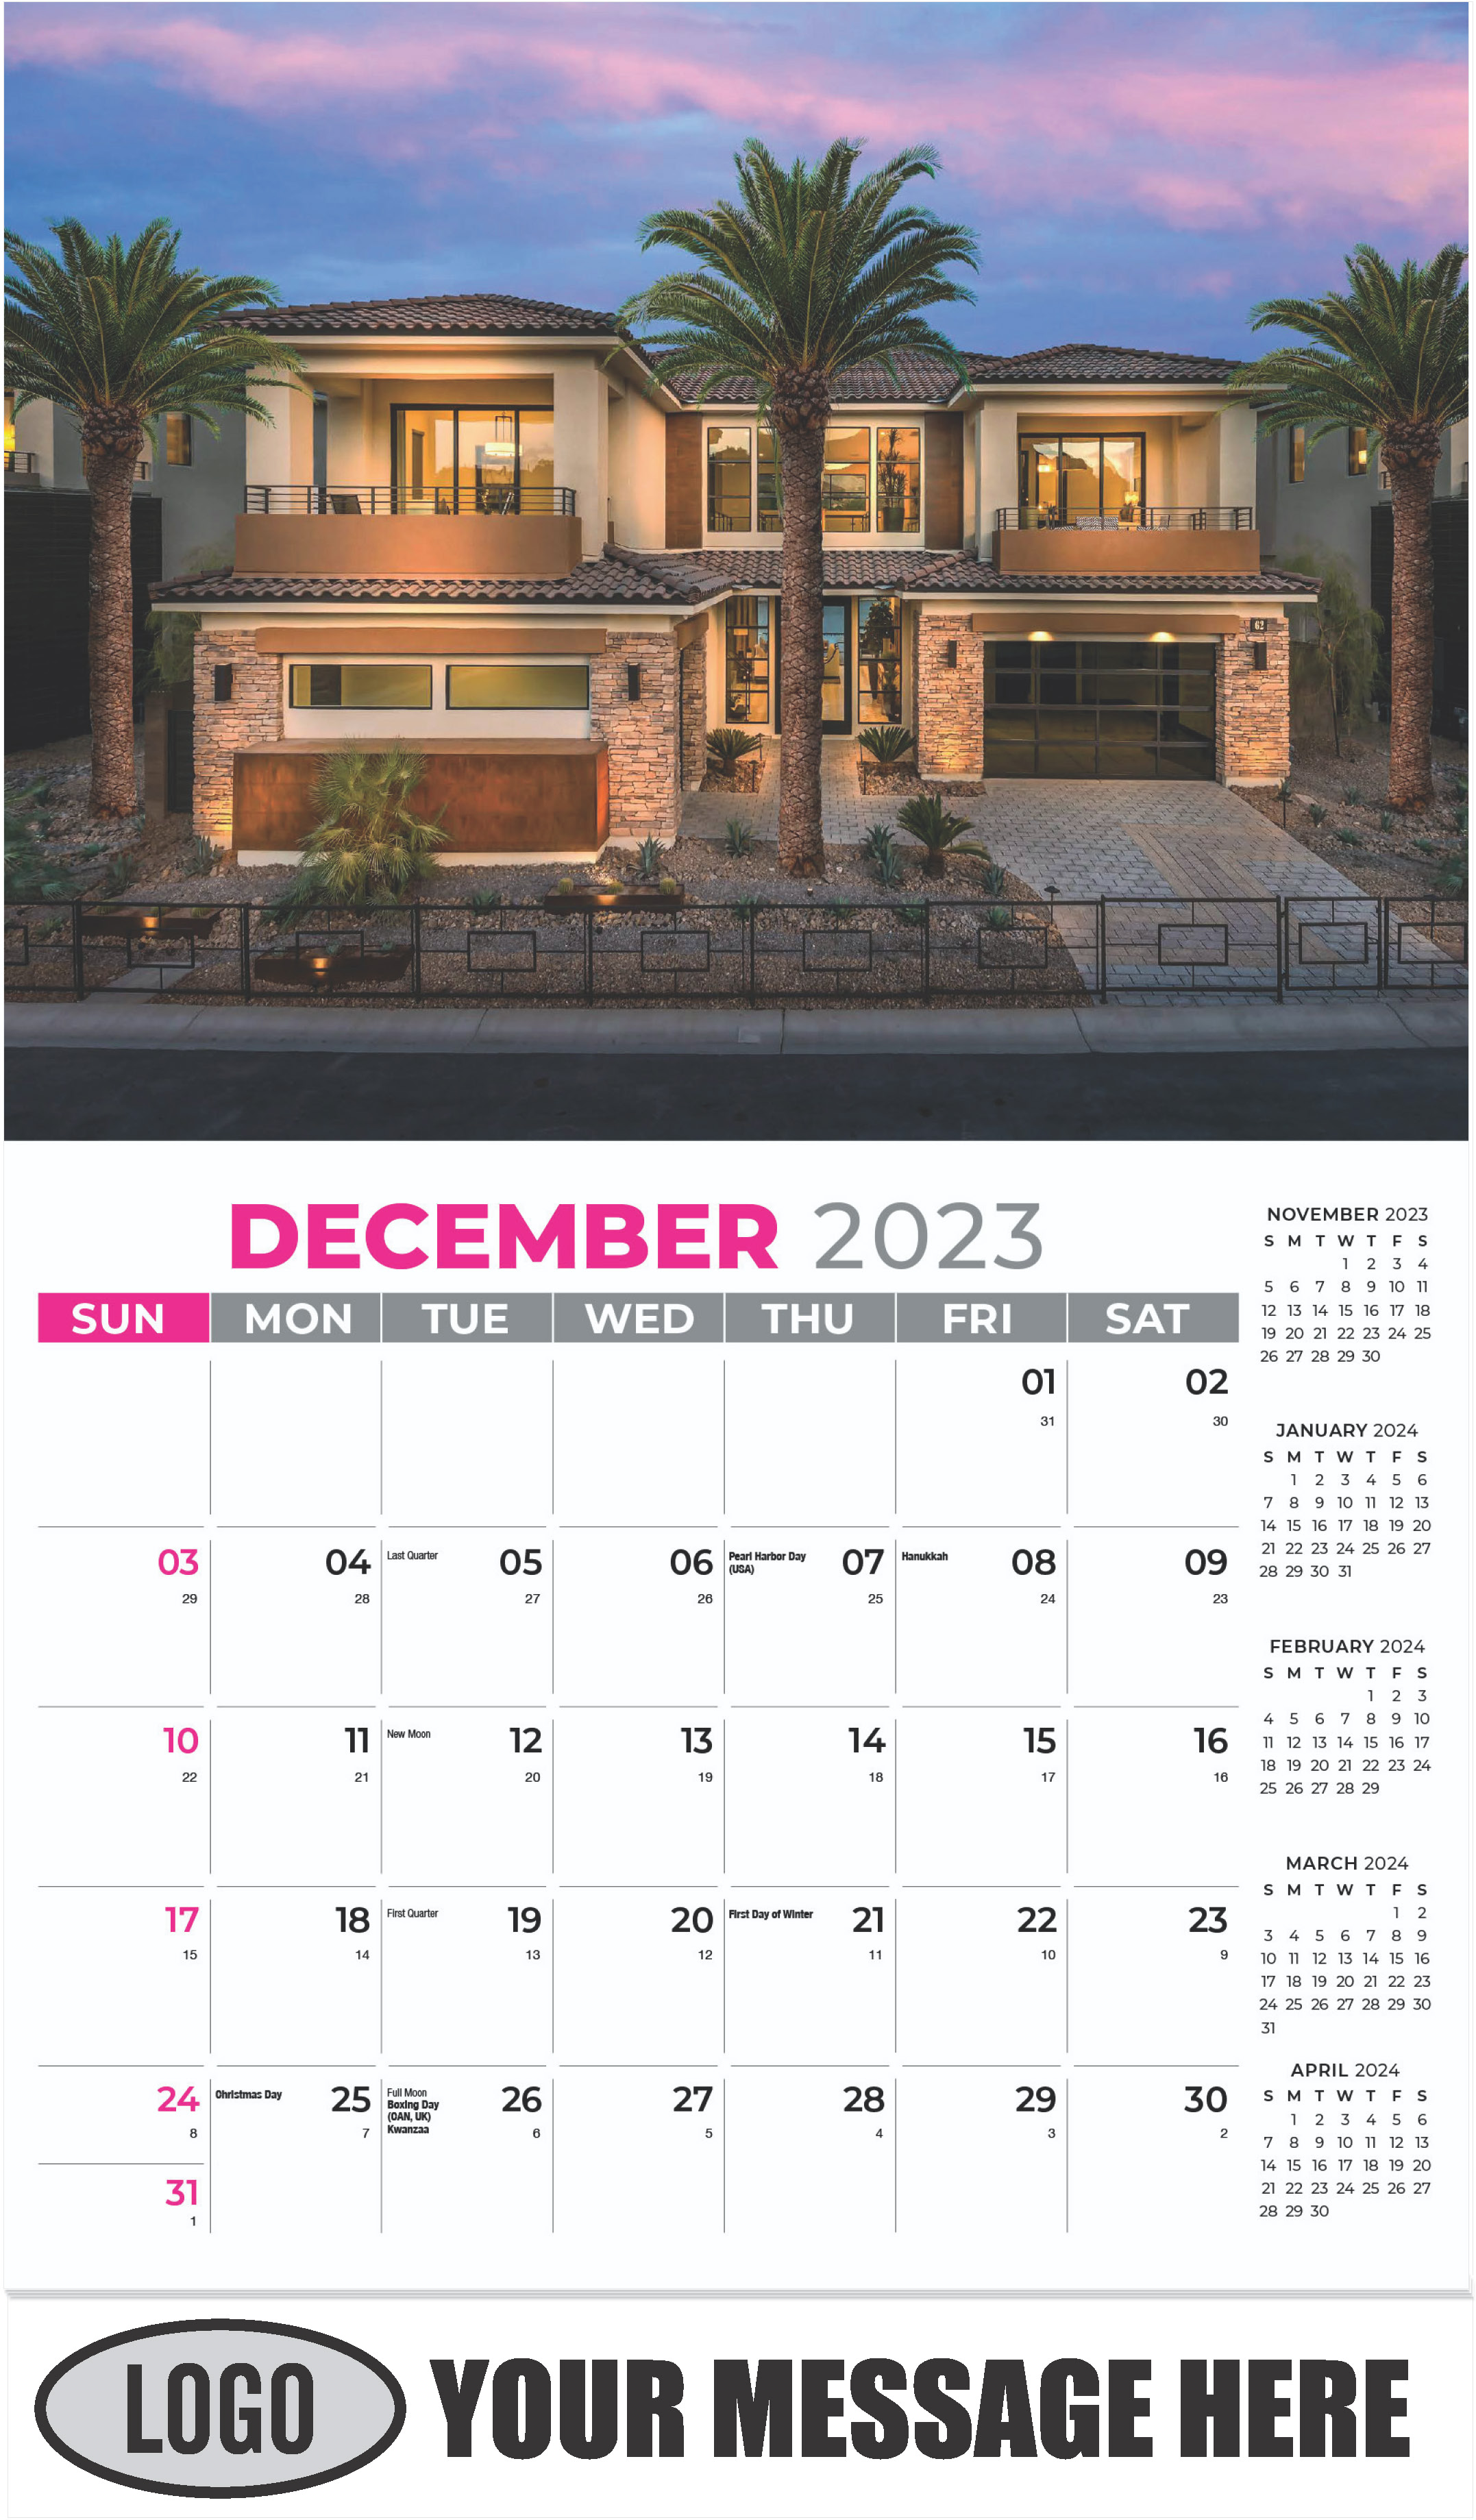 Luxury Homes Calendar - December 2023 - Homes 2023 Promotional Calendar